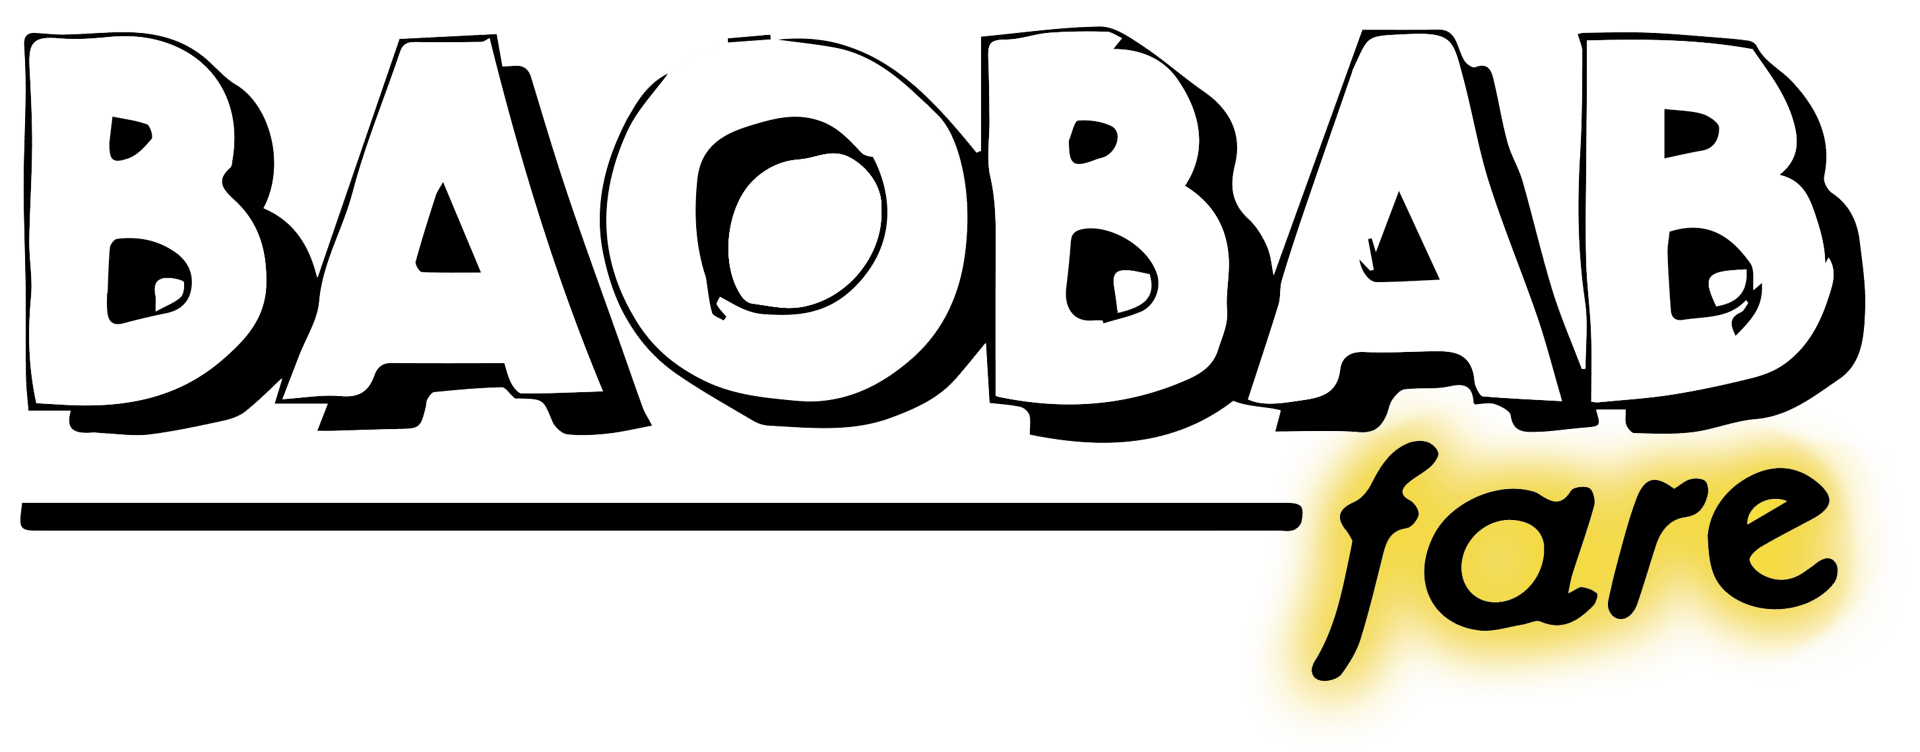 Baobab fare logo